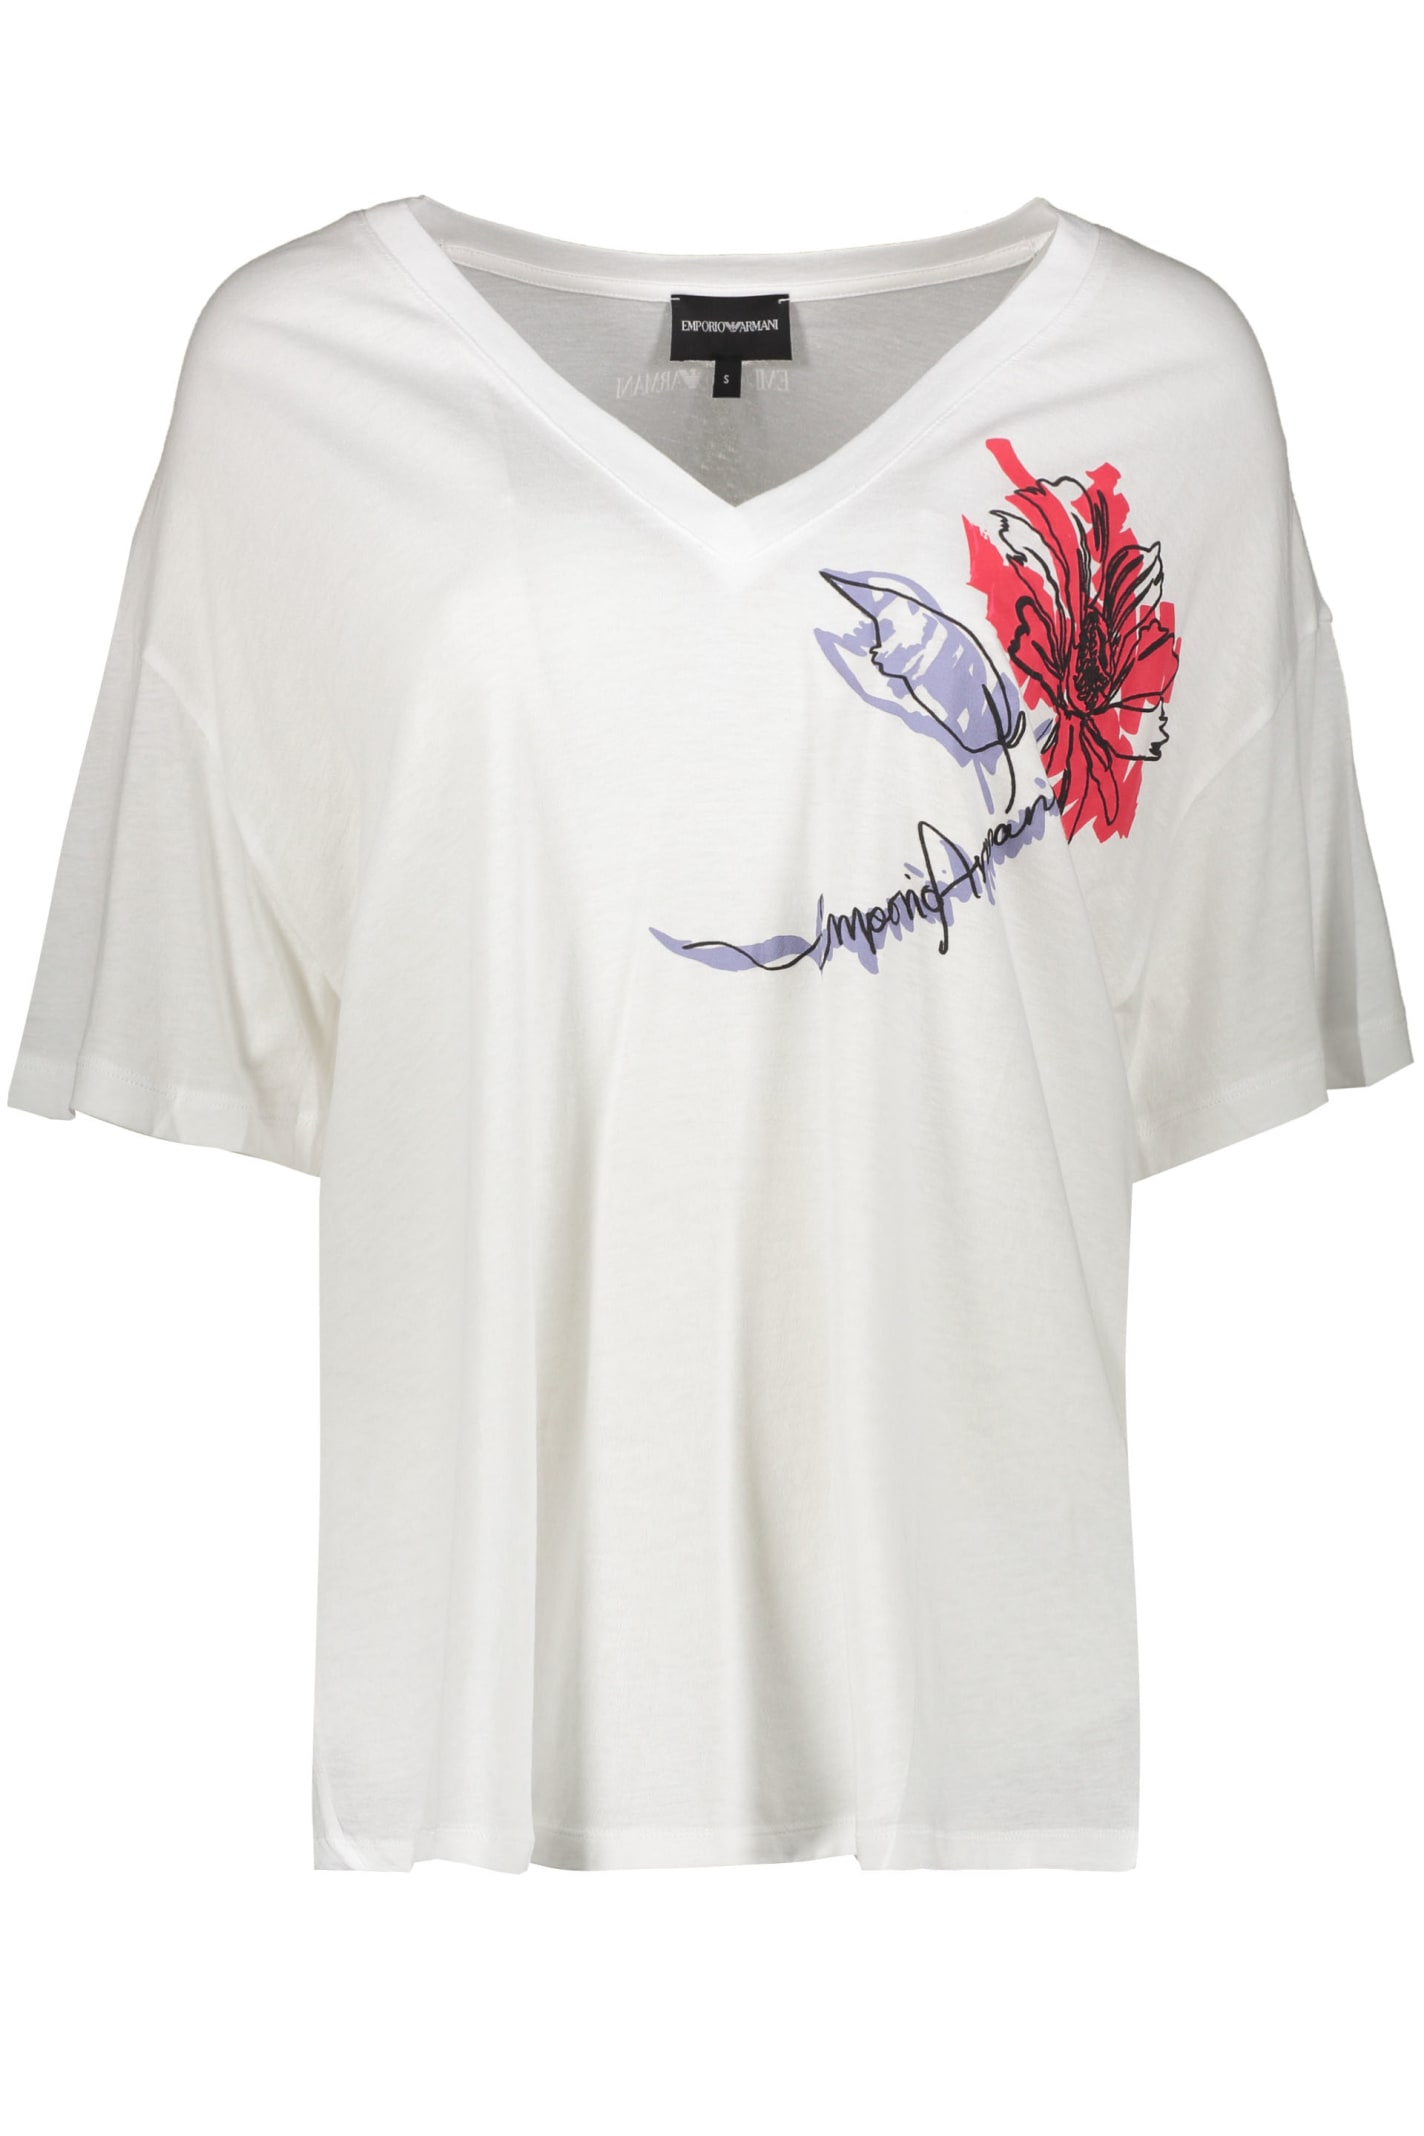 Emporio Armani Printed T-shirt In White